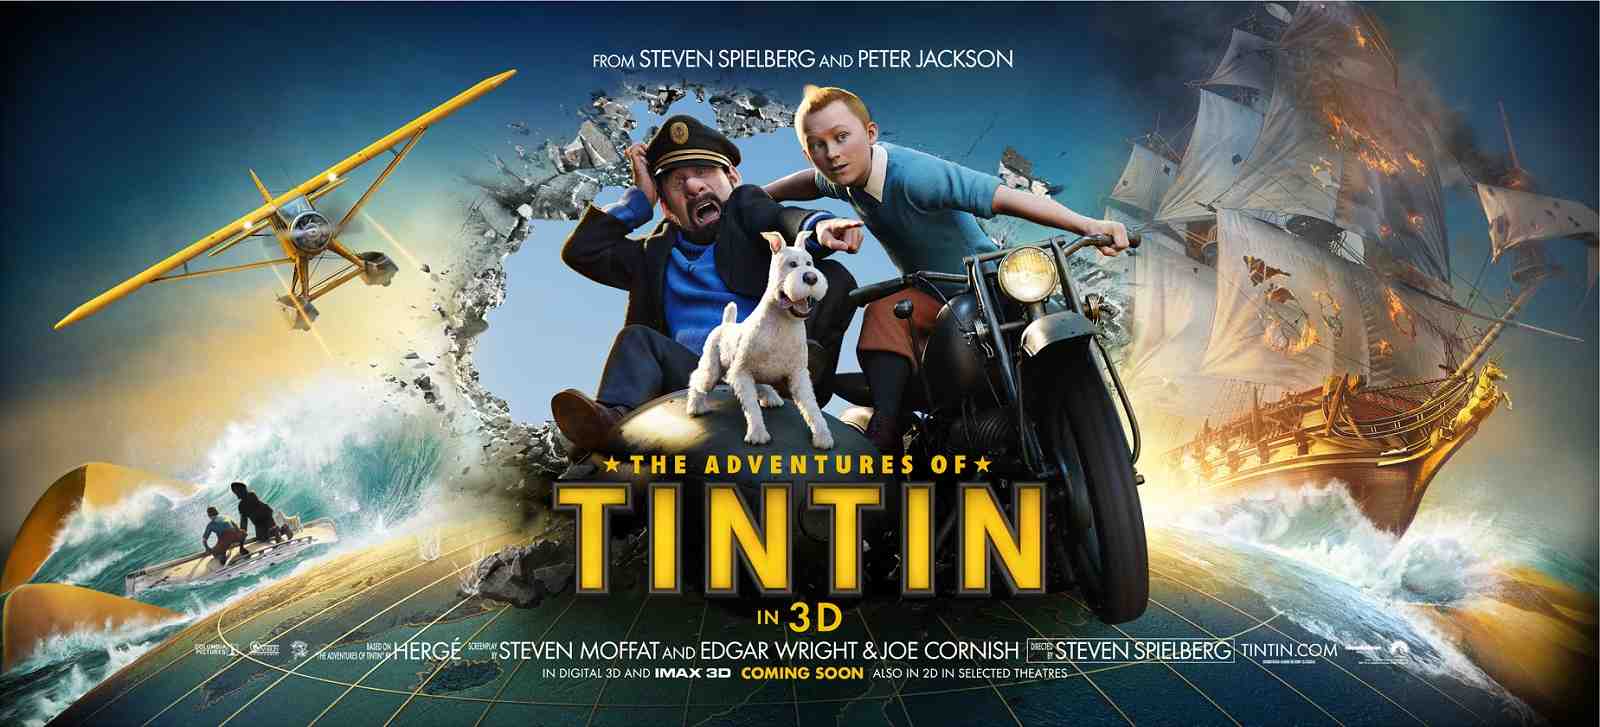 Horizontal poster for "The Adventures of Tin Tin" (2011)